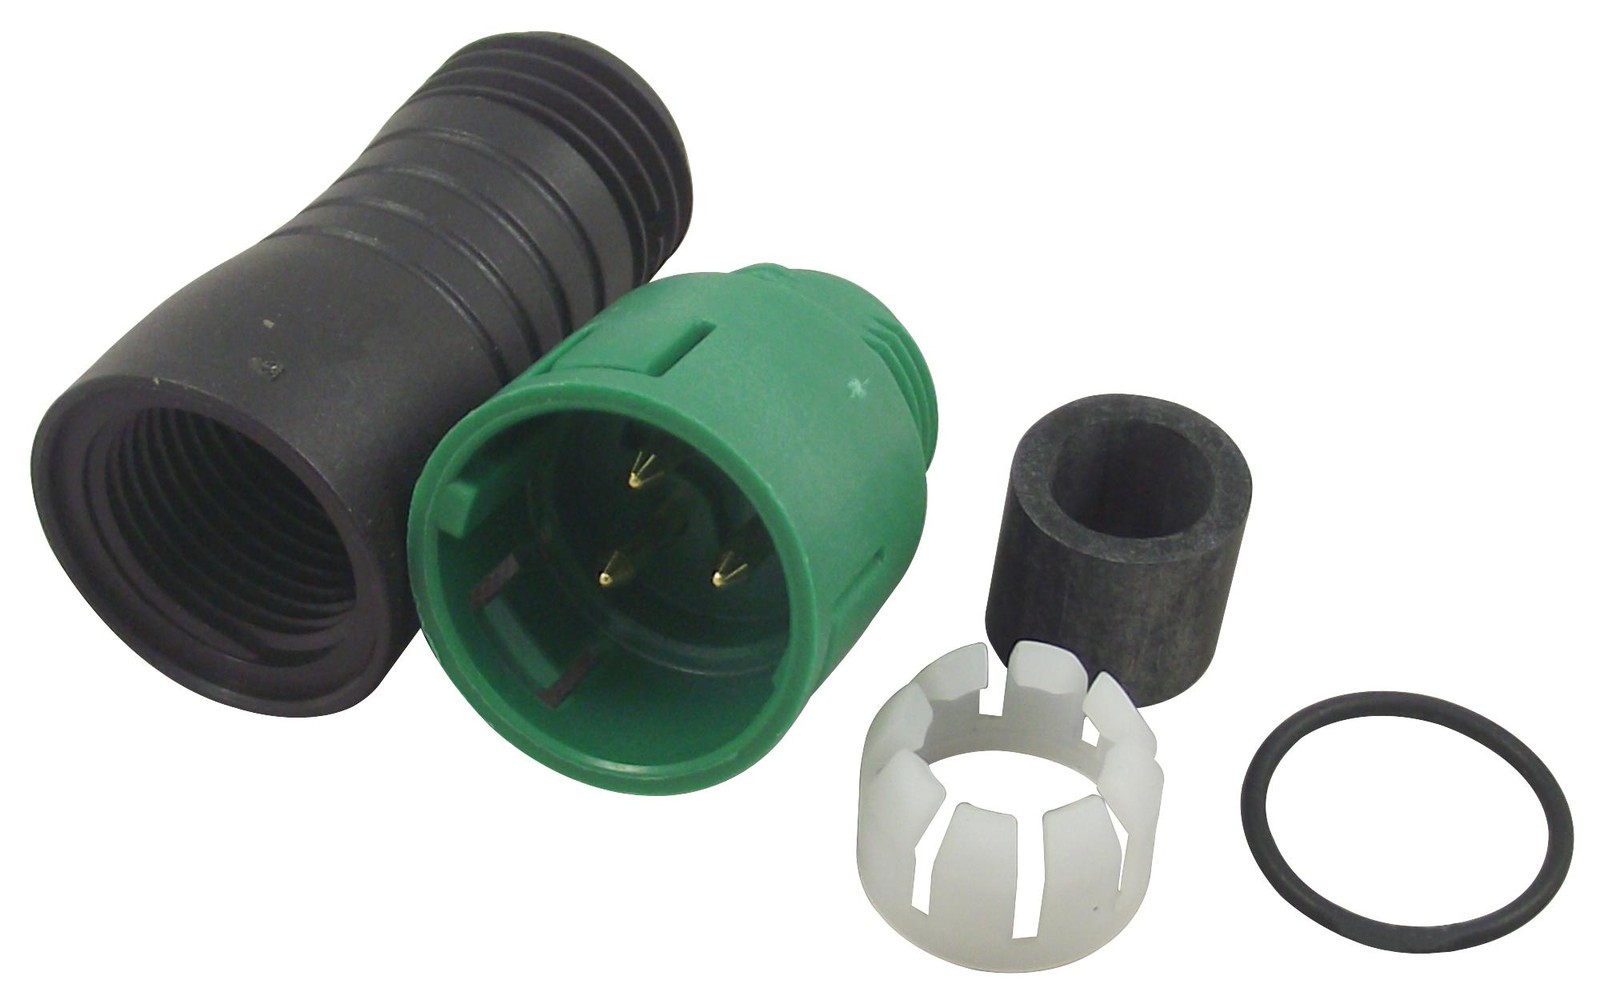 Binder 99-9105-70-03 Plug, Free, 4-6mm, Green, 3Way